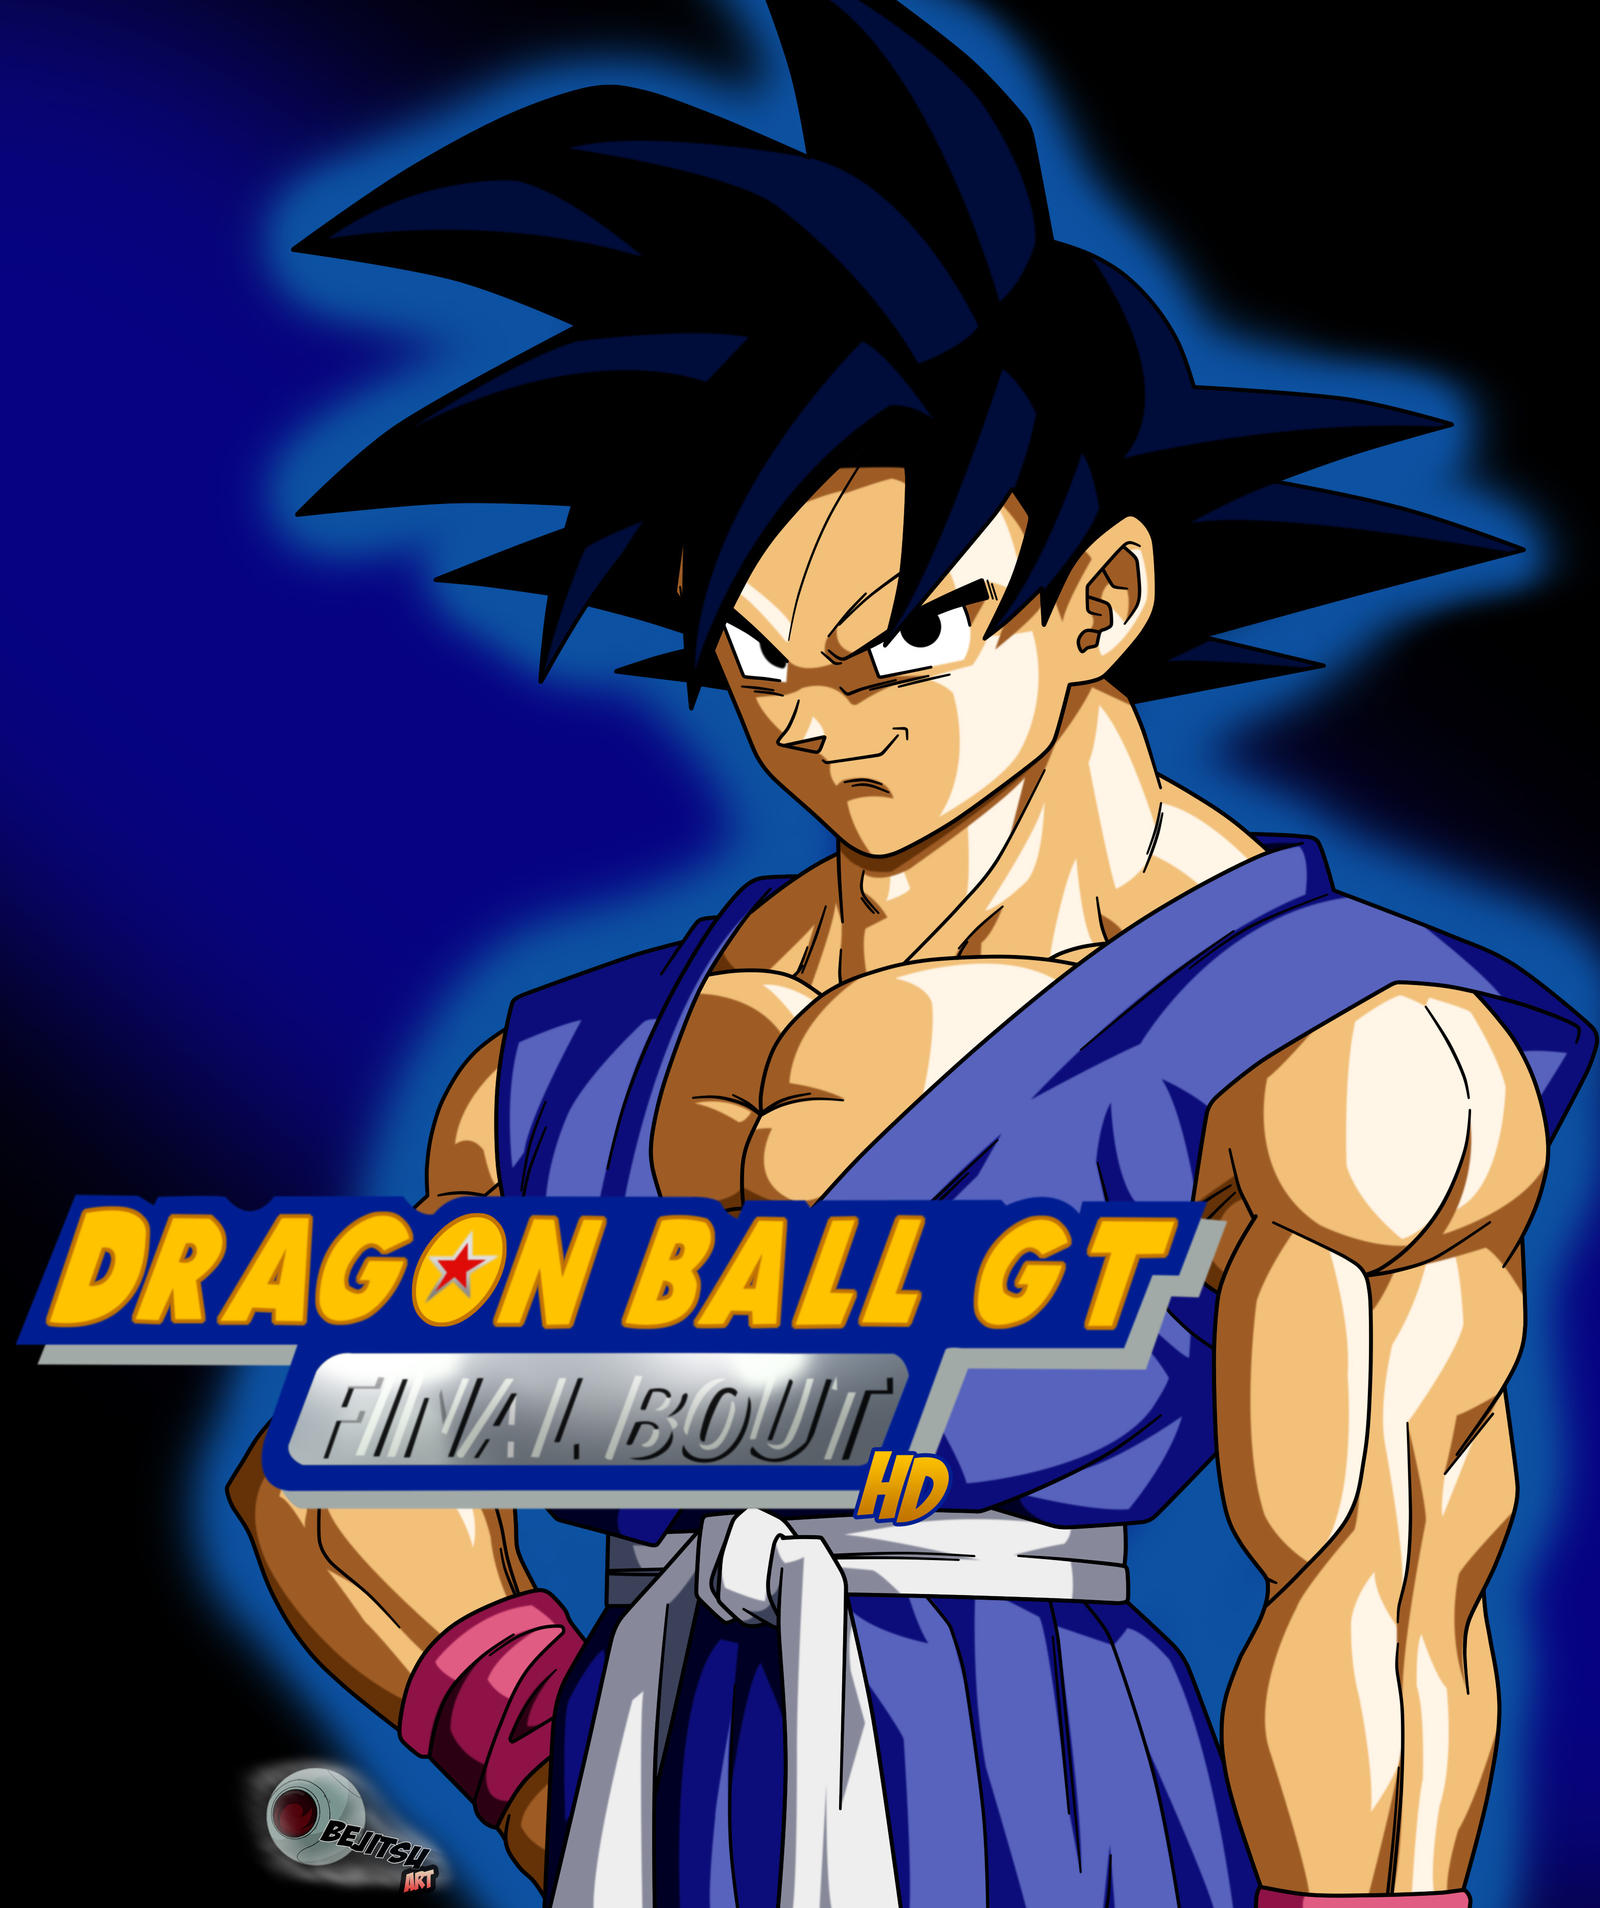 cover dragon ball gt final bout by Bejitsu on DeviantArt